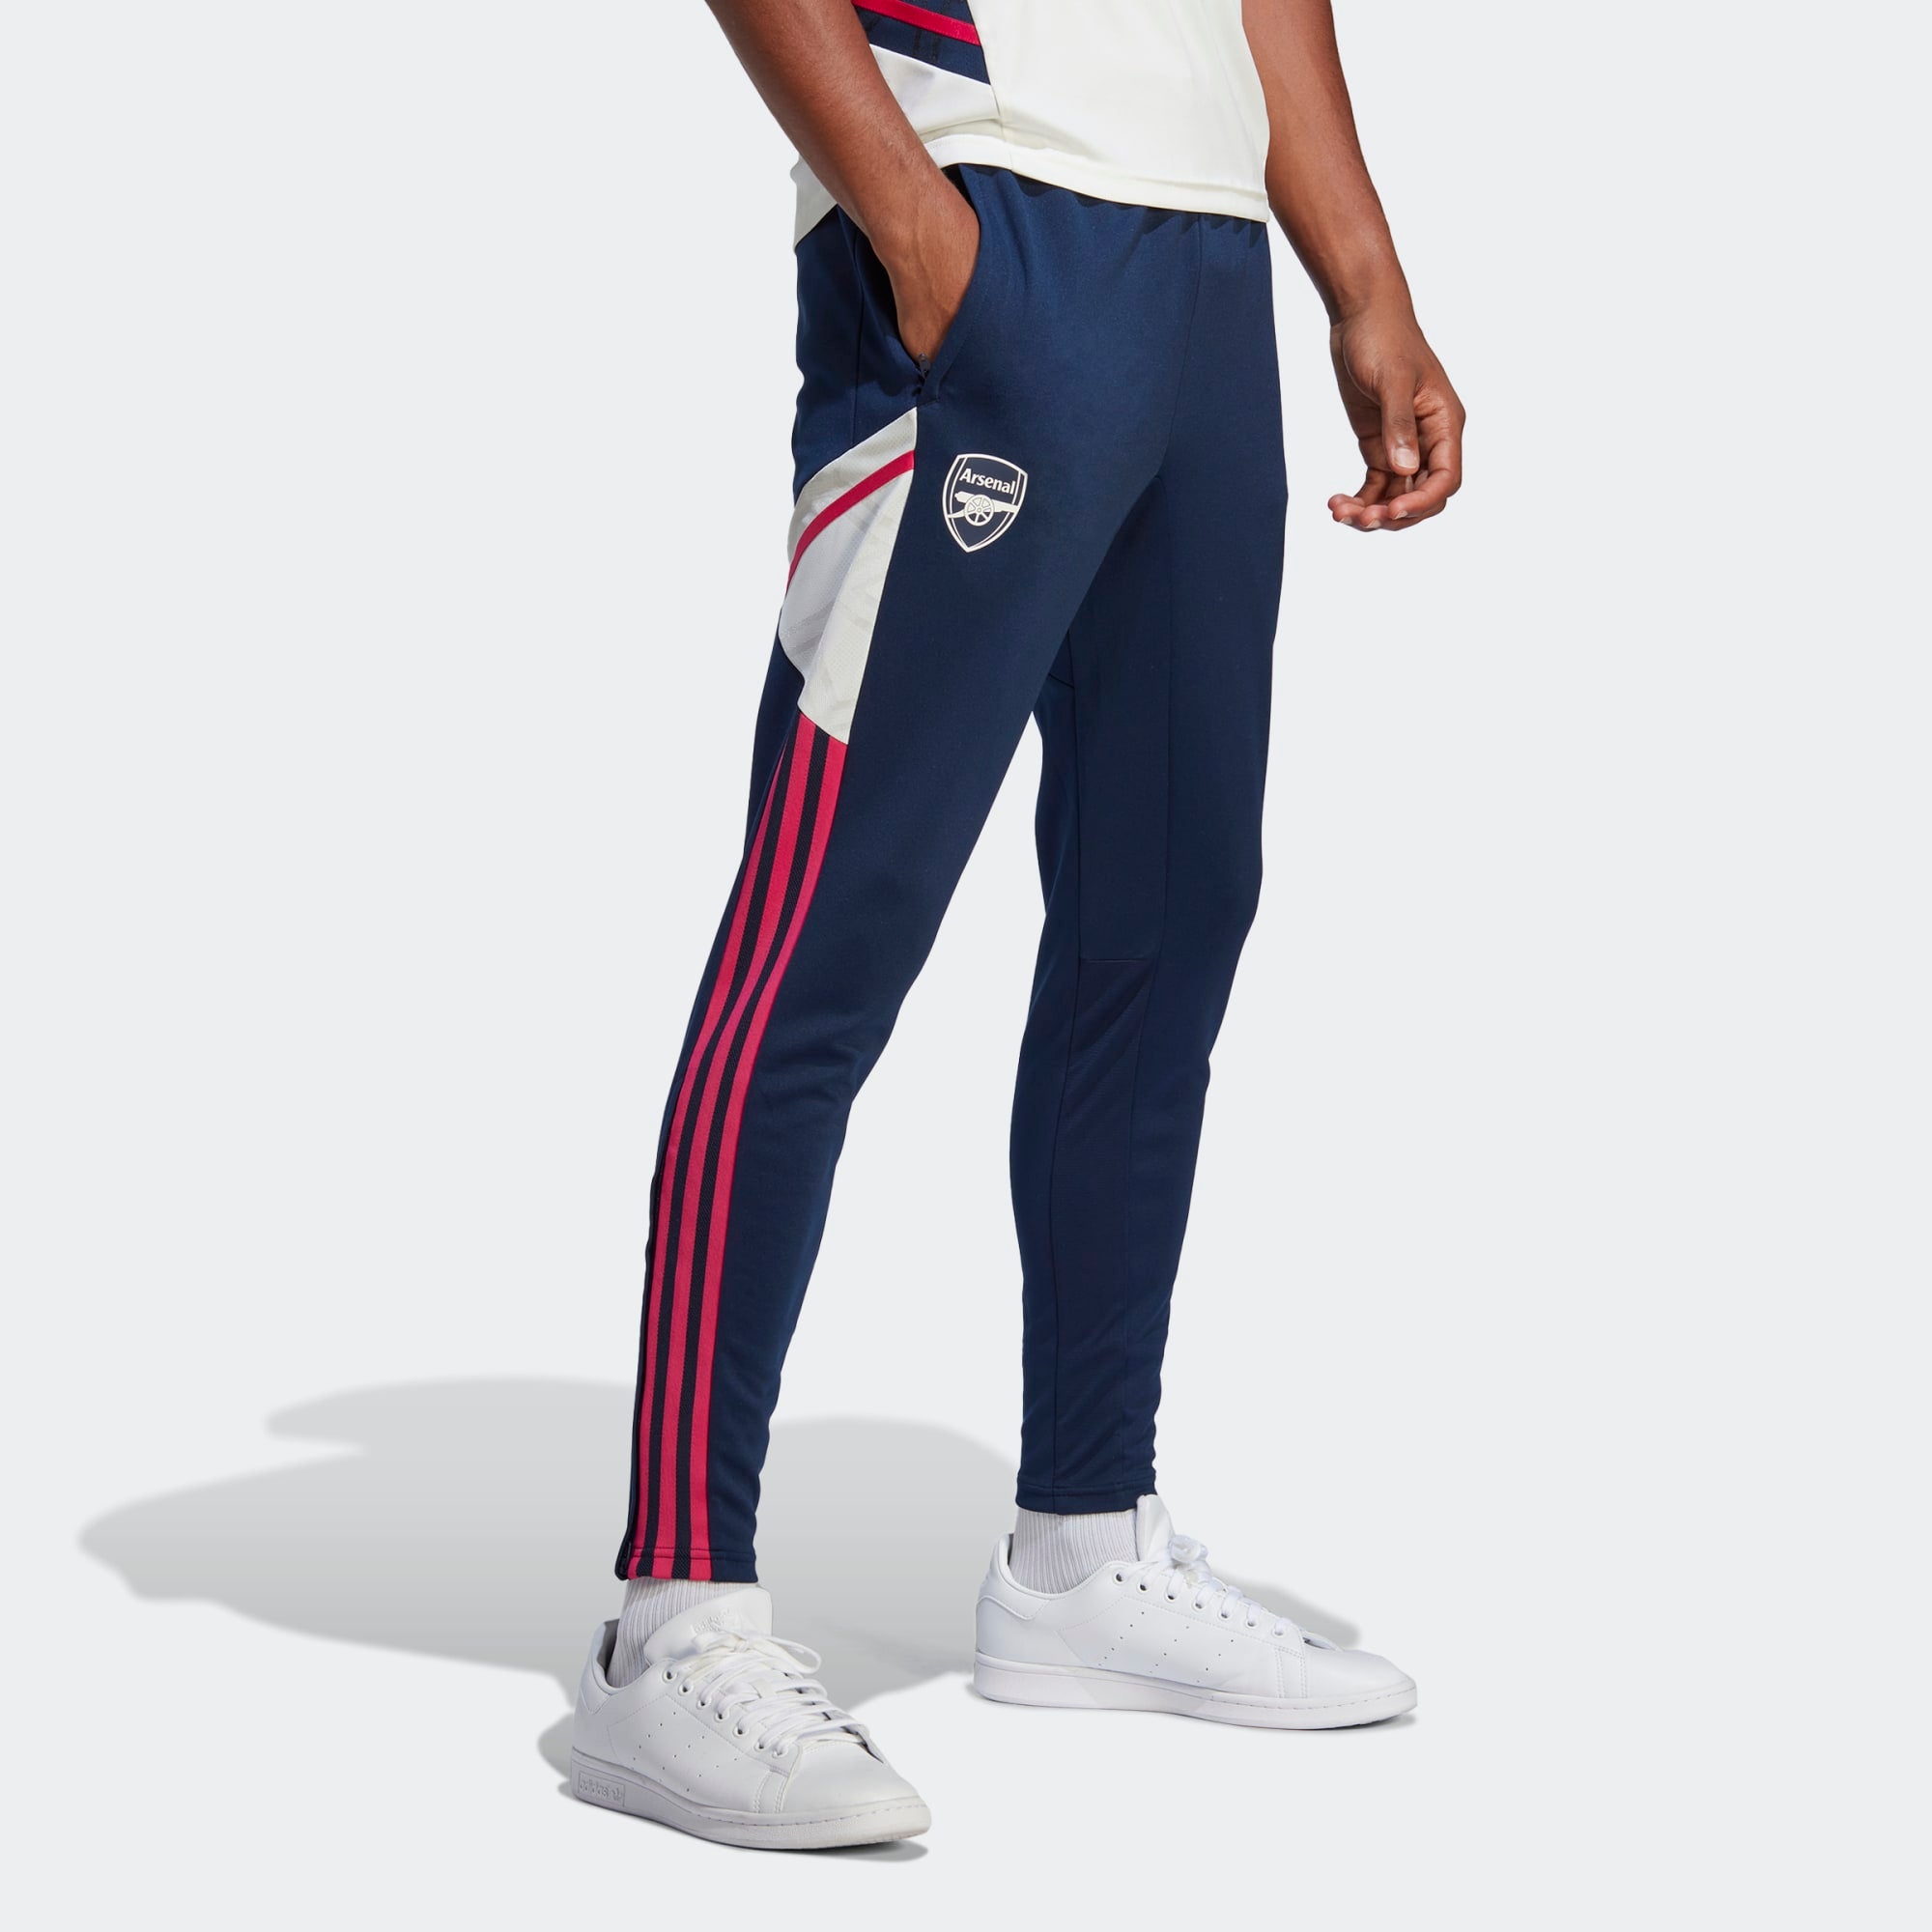 adidas Soccer Pants  Best Price Guarantee at DICK'S